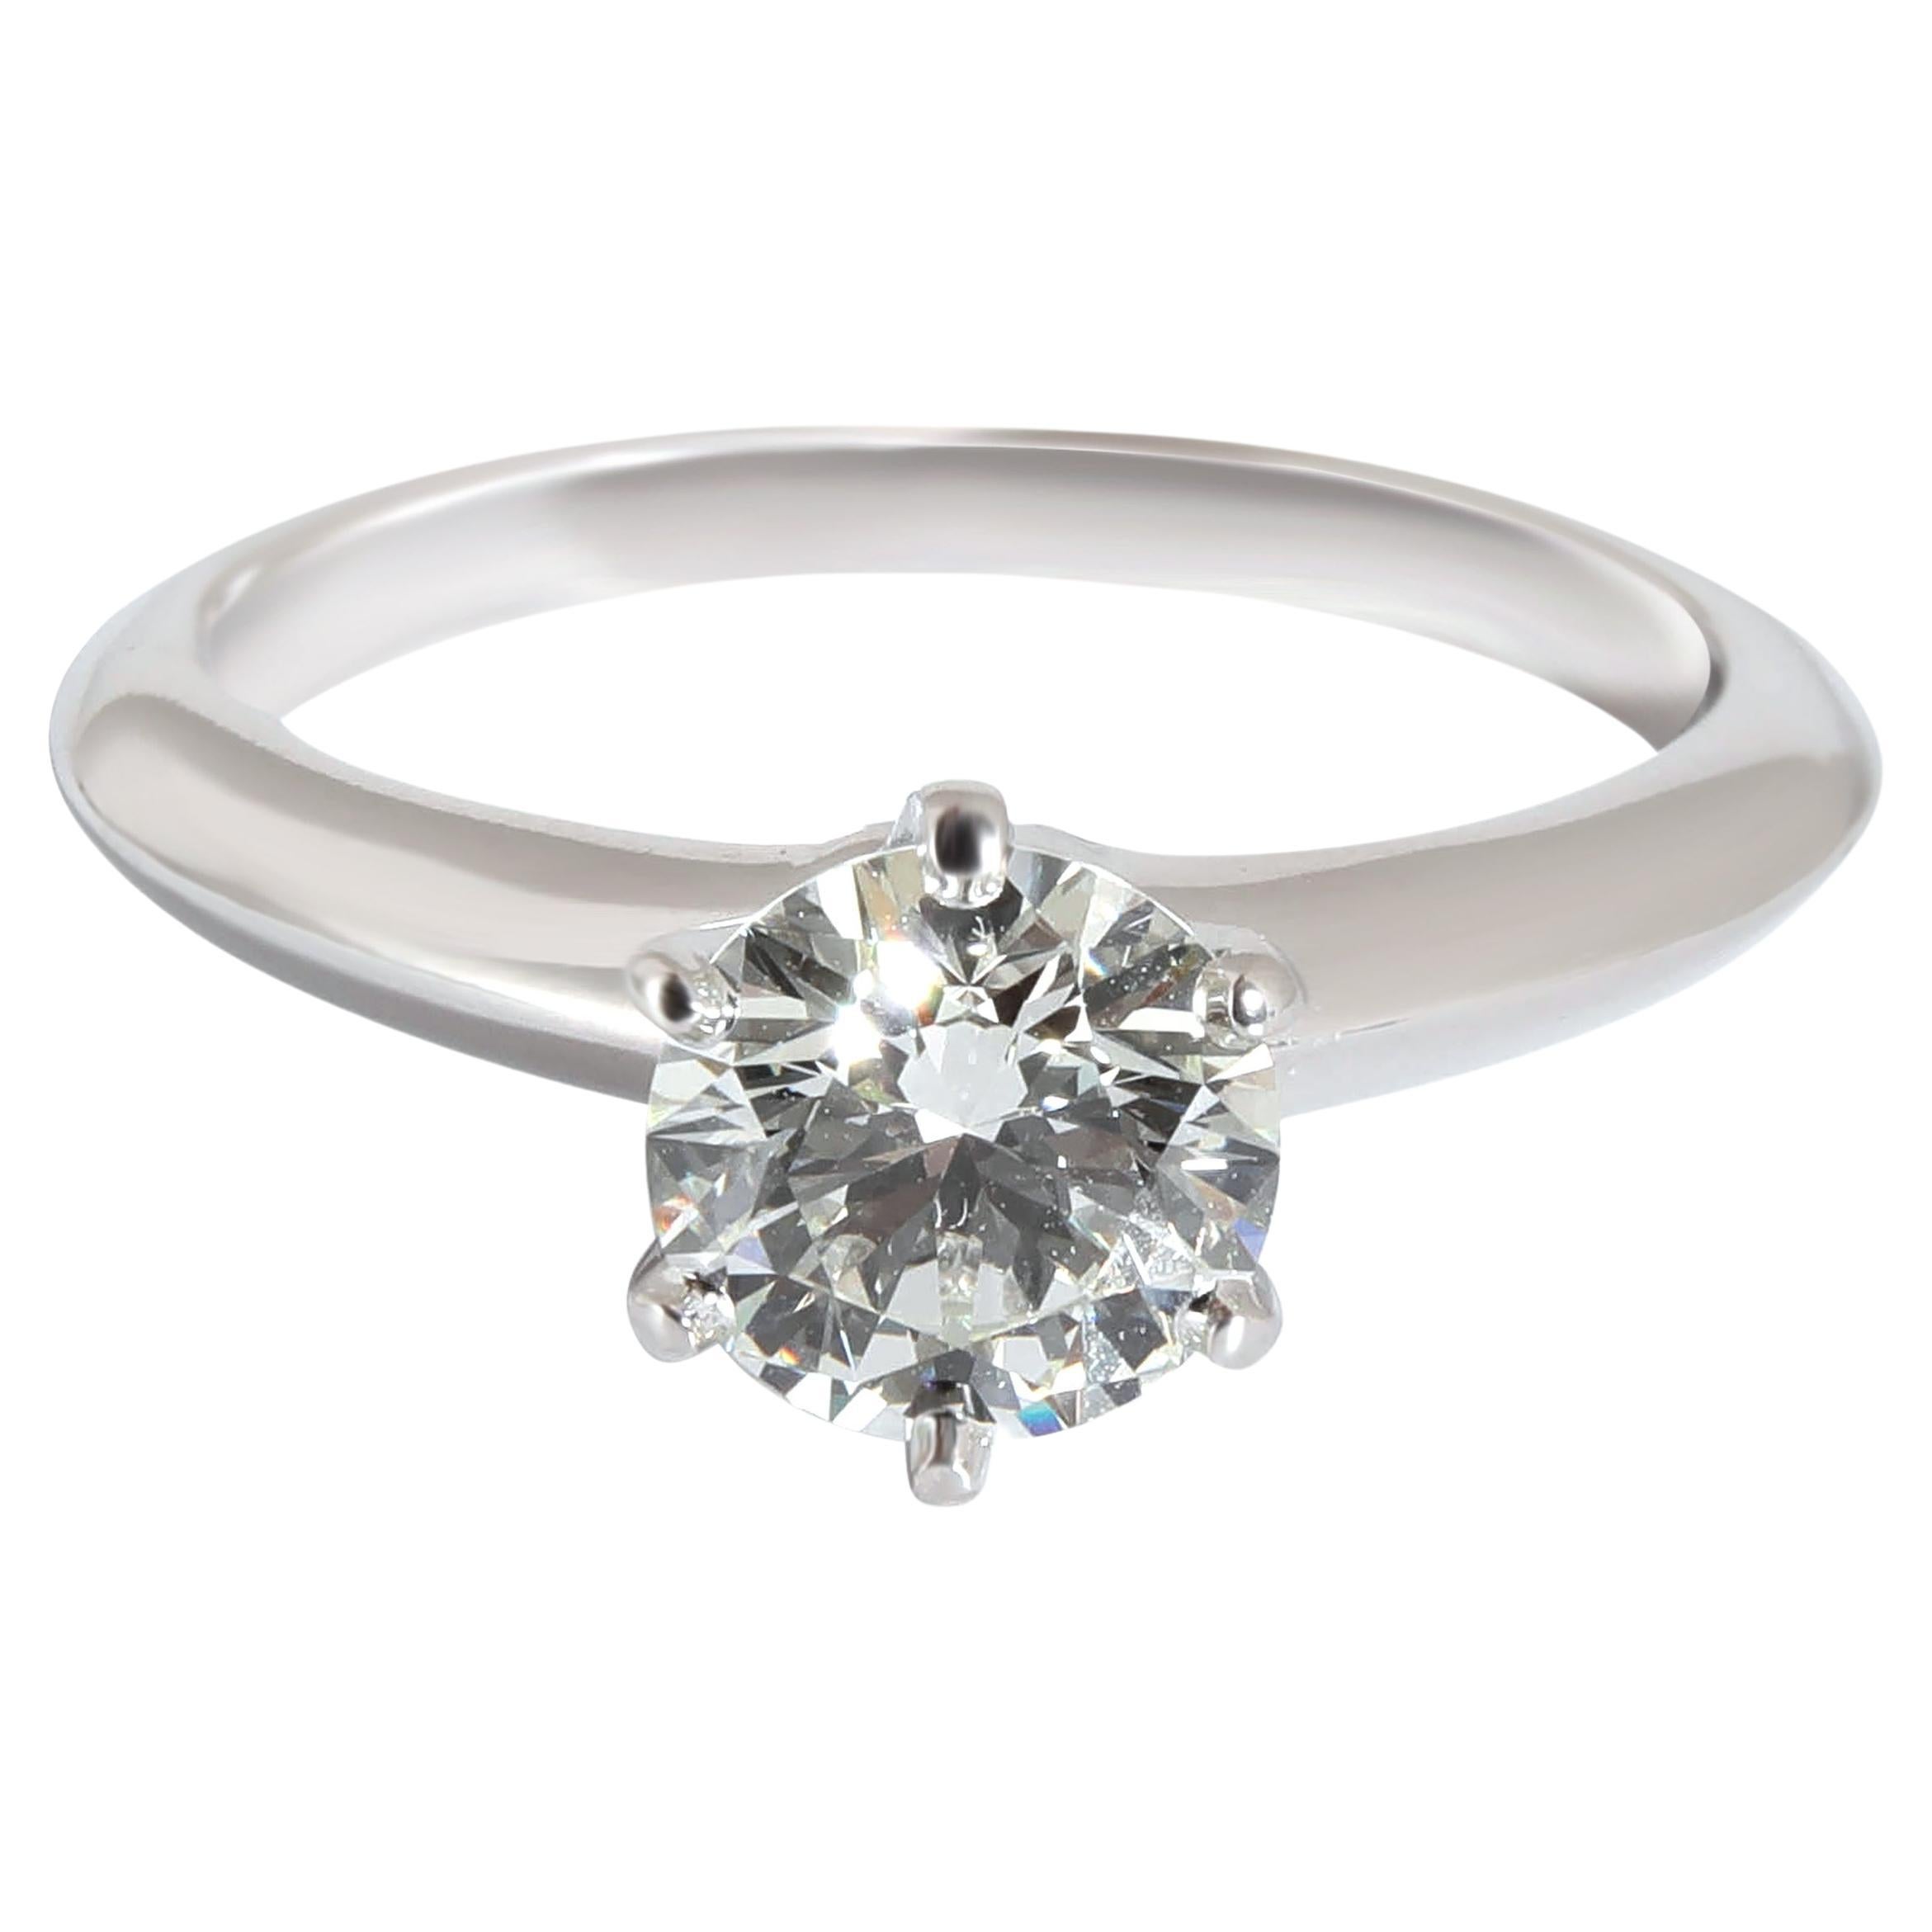 Tiffany & Co. Tiffany Setting Engagement Ring in Platinum I VVS1 1.19 CTW